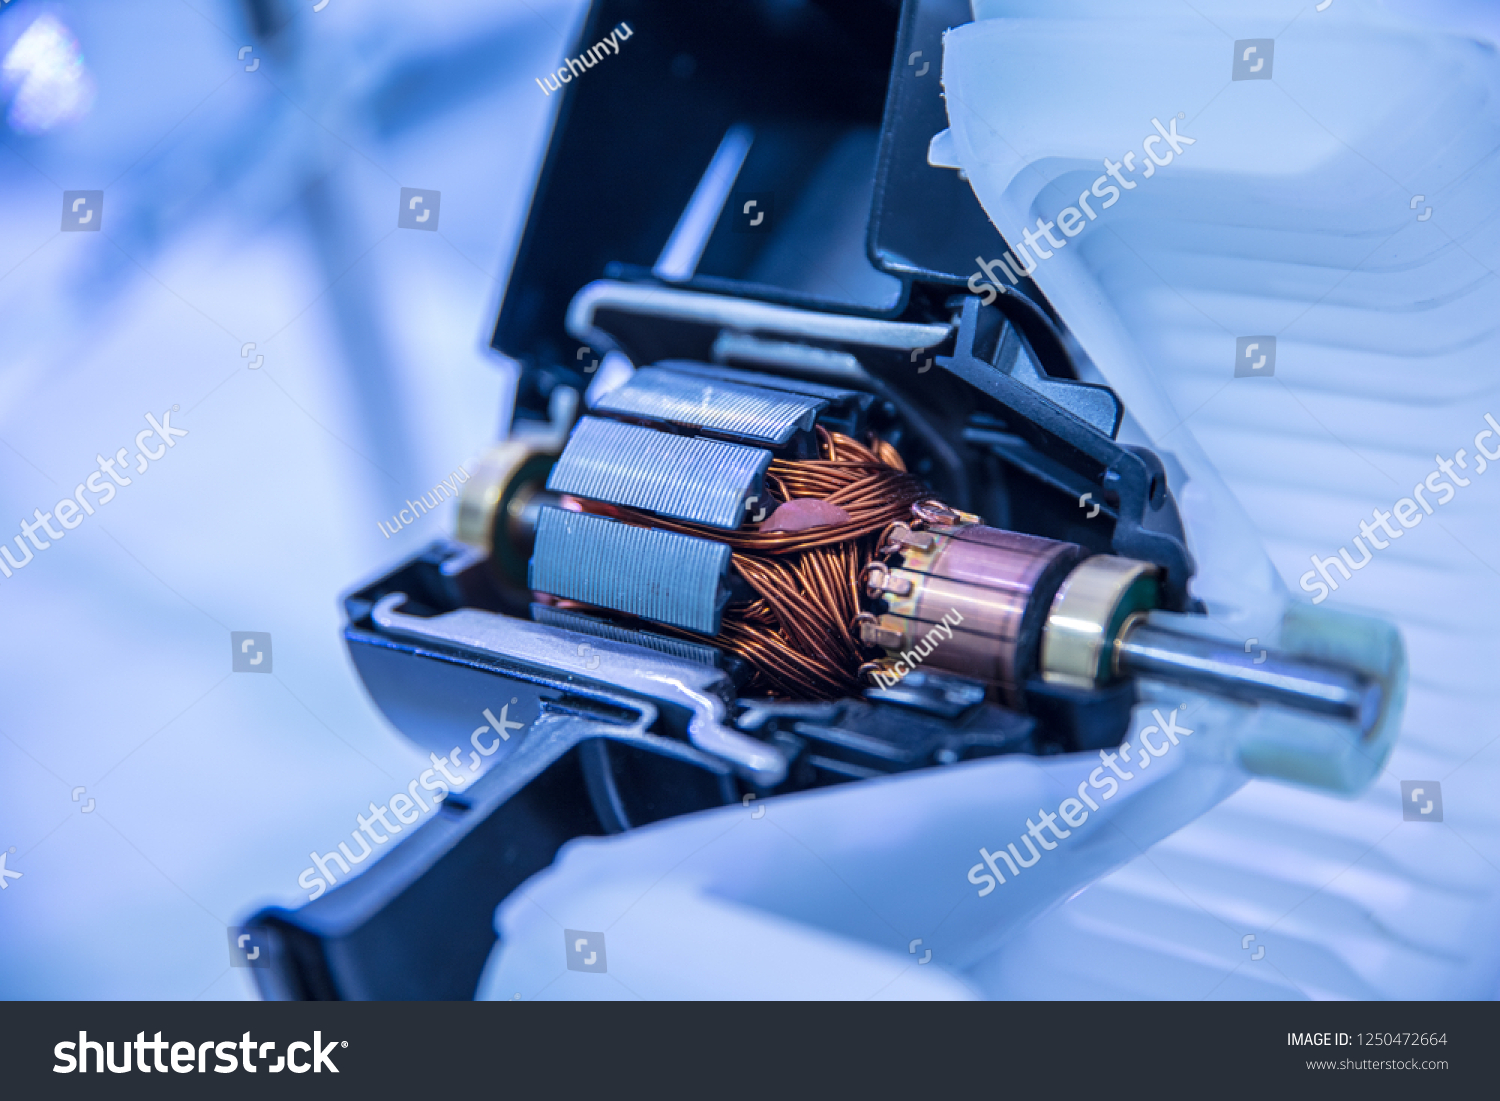 stock-photo-alternator-image-of-car-alternator-sectional-view-of-an-automobile-generator-1250472664